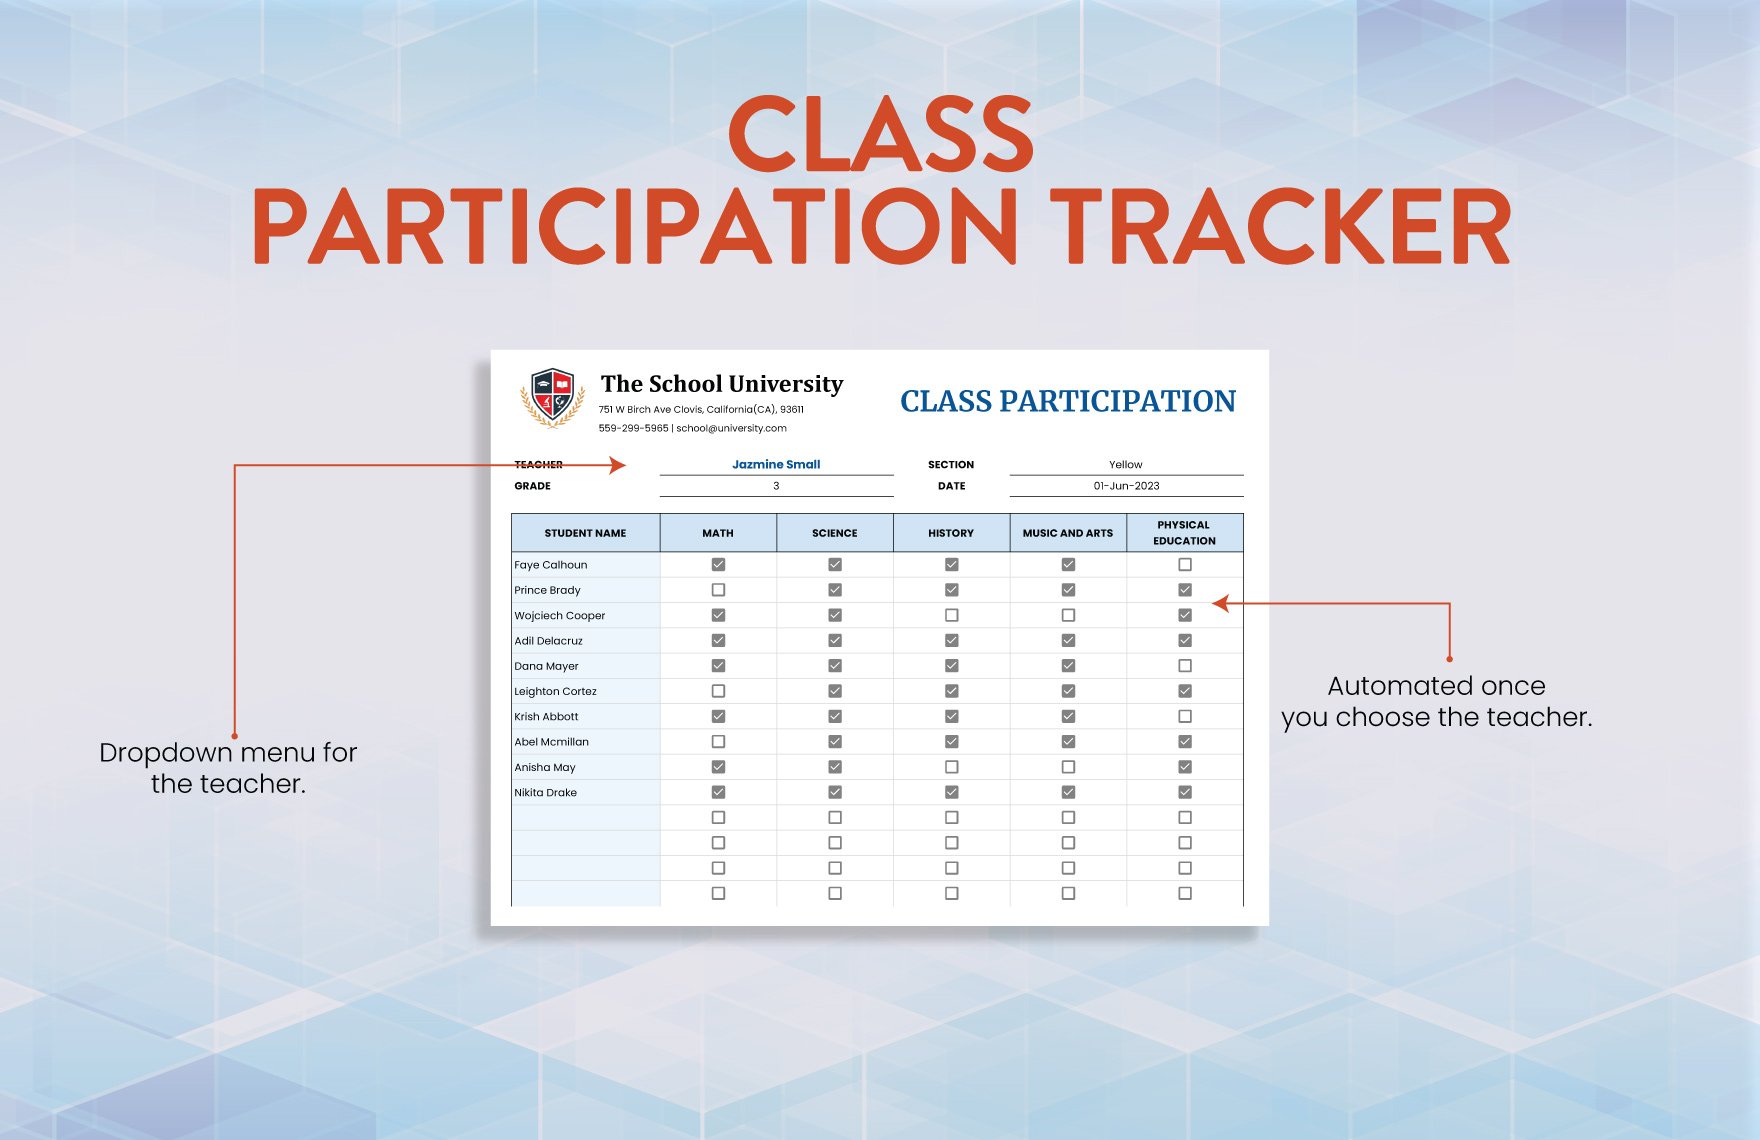 Class Participation Tracker Template